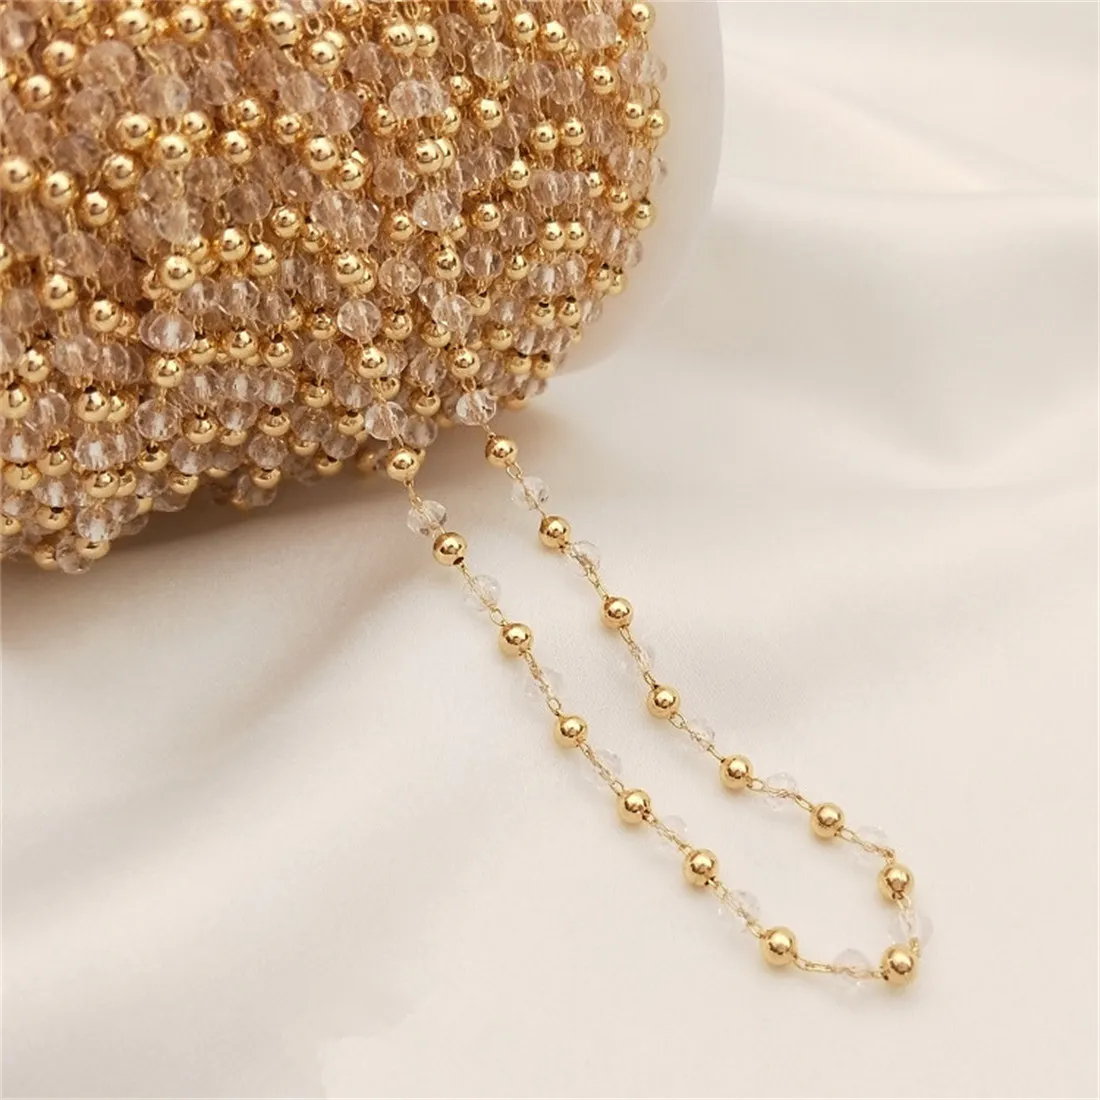 

14K Pack Gold Glow Beads Cut Zircon Round Beads Spacer Chain DIY Loose Chain Handmade Bracelet Headpiece Accessories B629